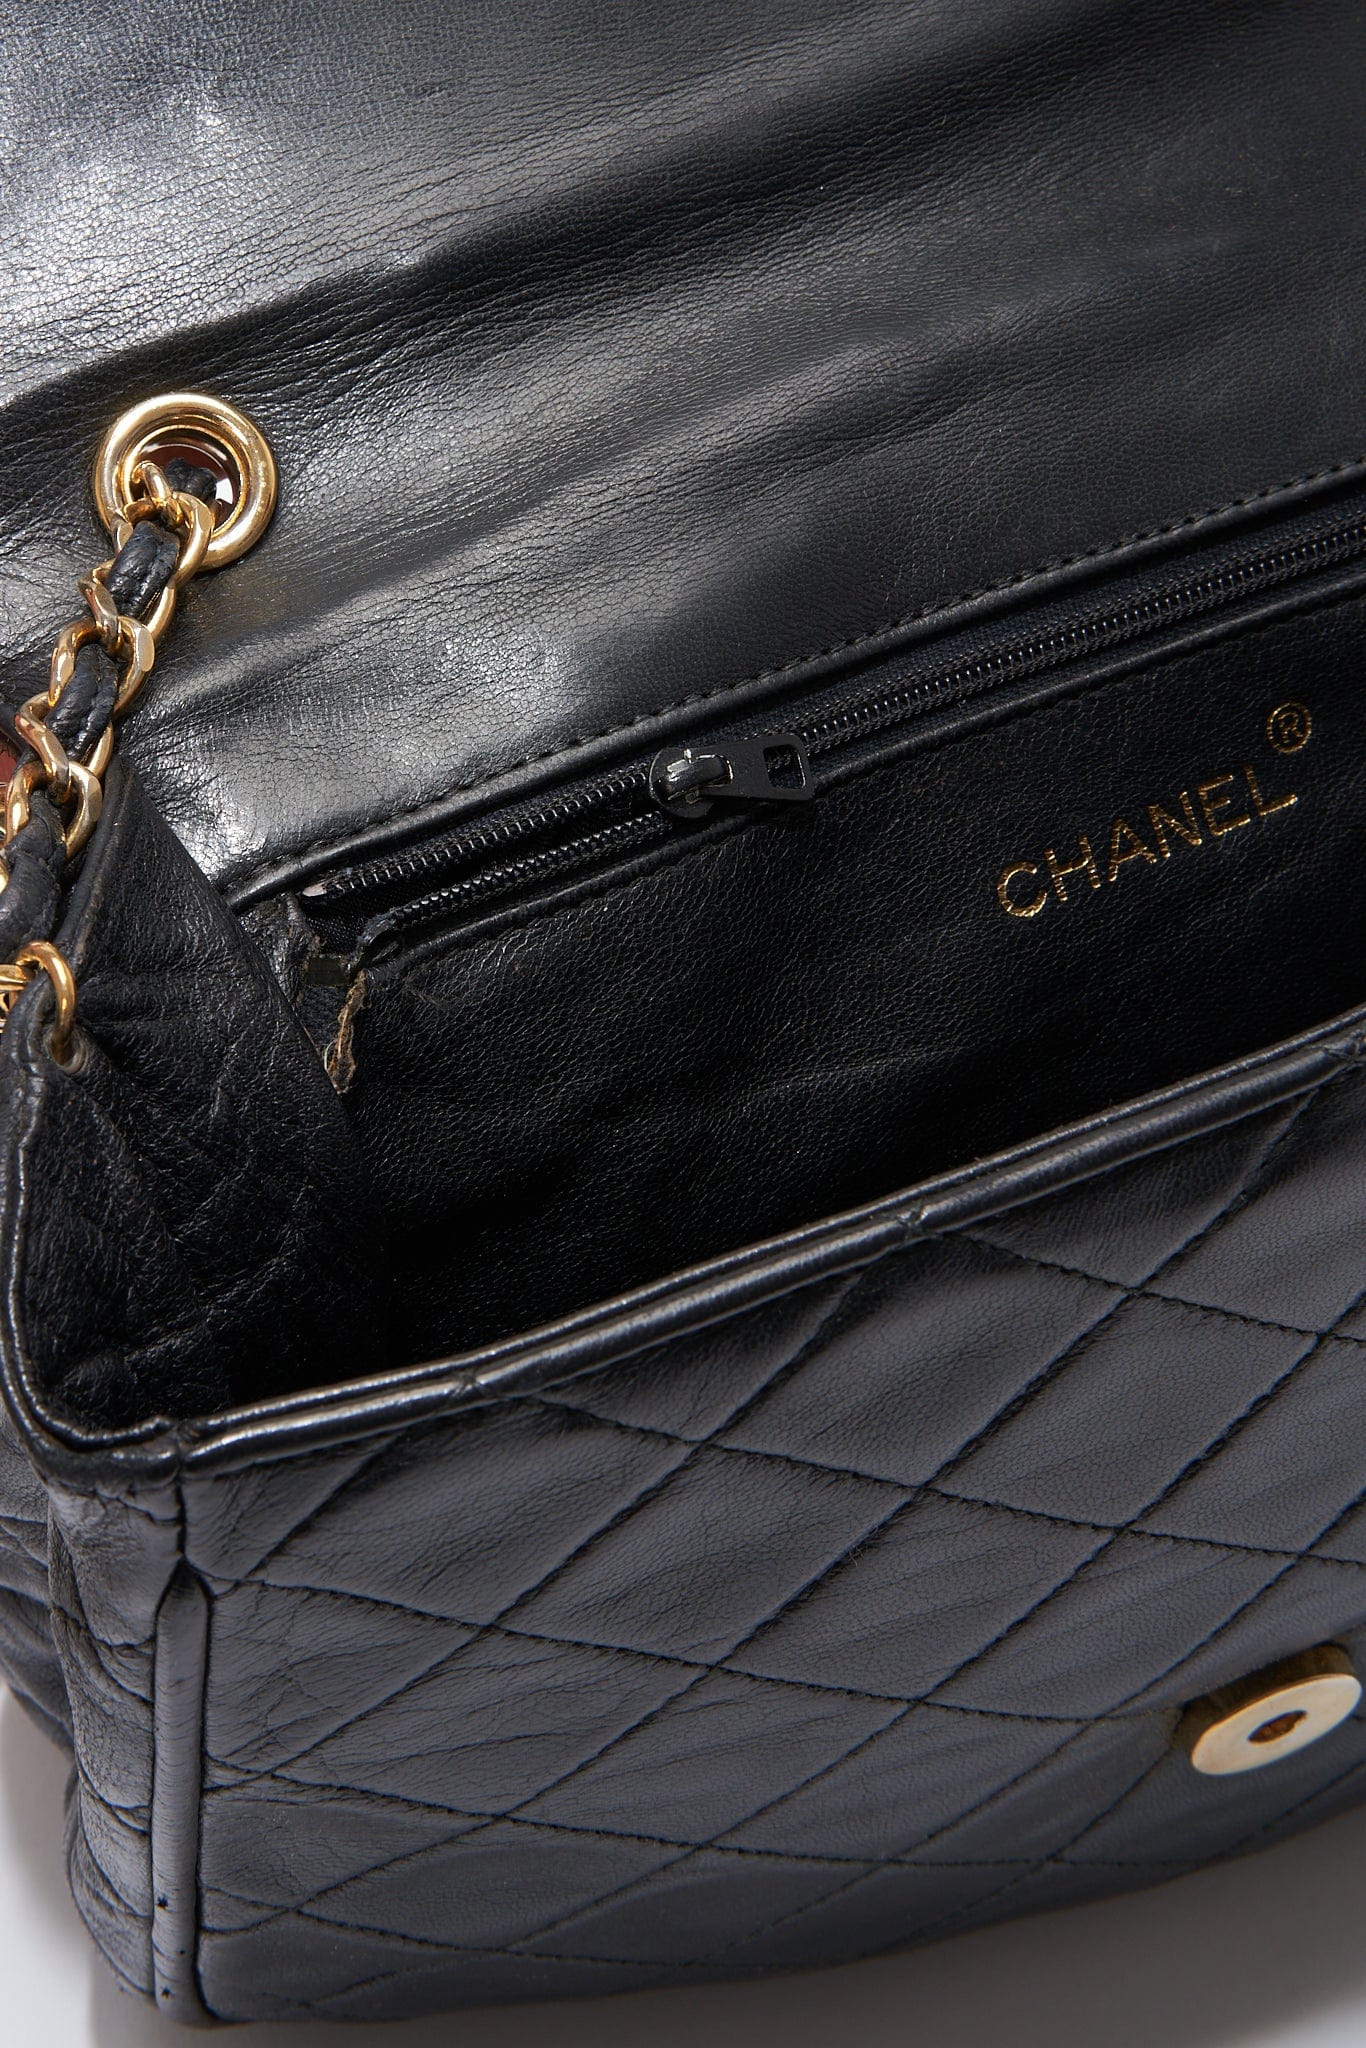 Chanel Small Black Caviar Classic Flap GHW Black Interior  Luxury Shopping